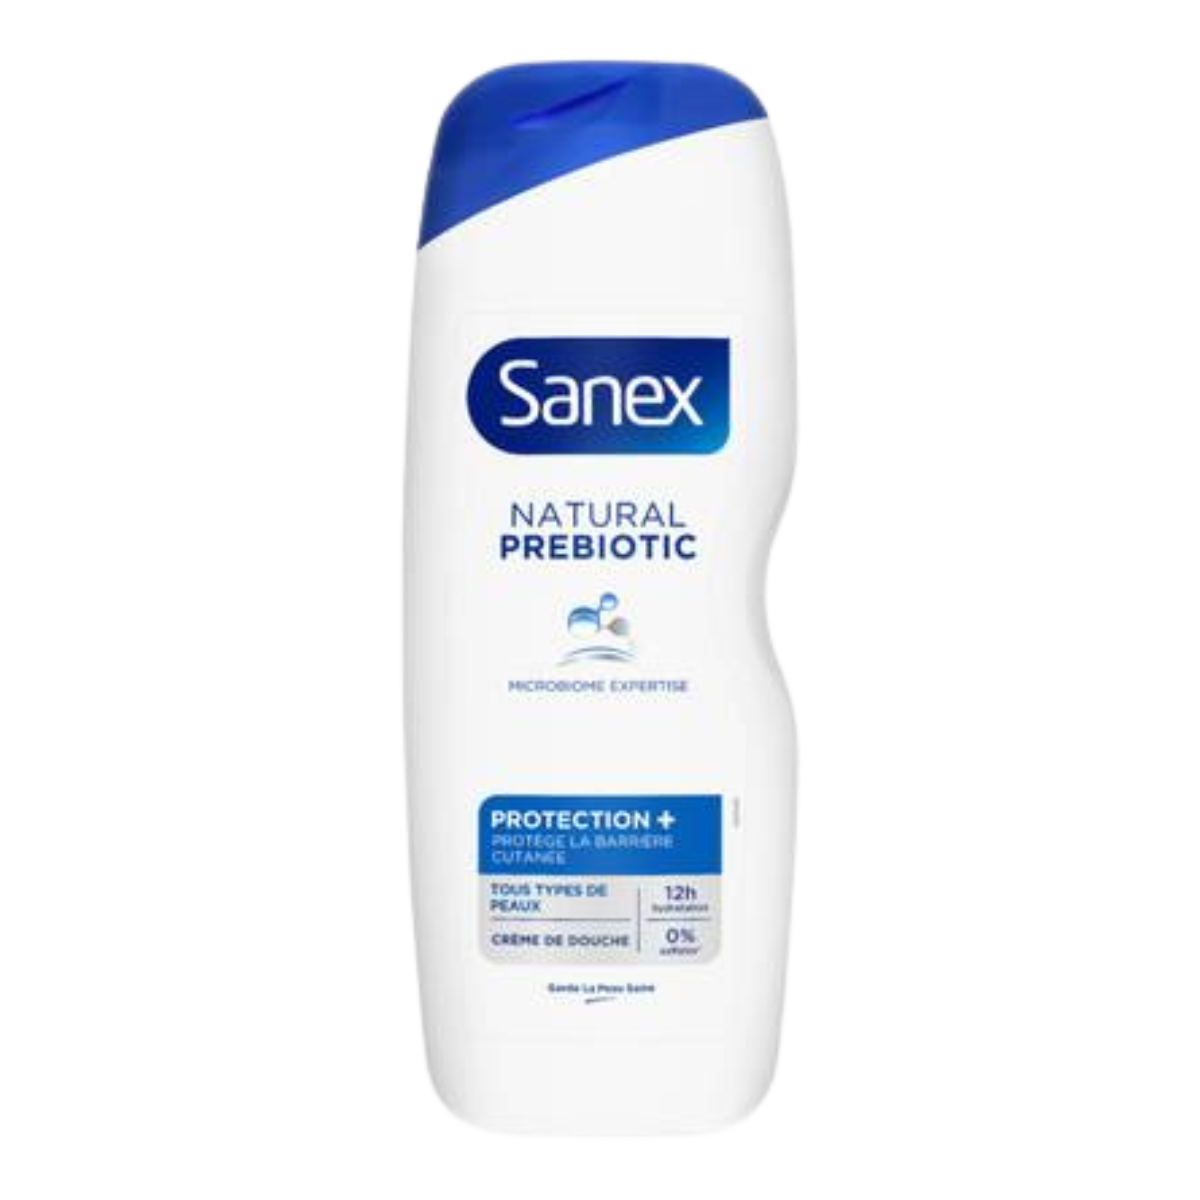 Gel douche Sanex Natural Prebiotic Protection +